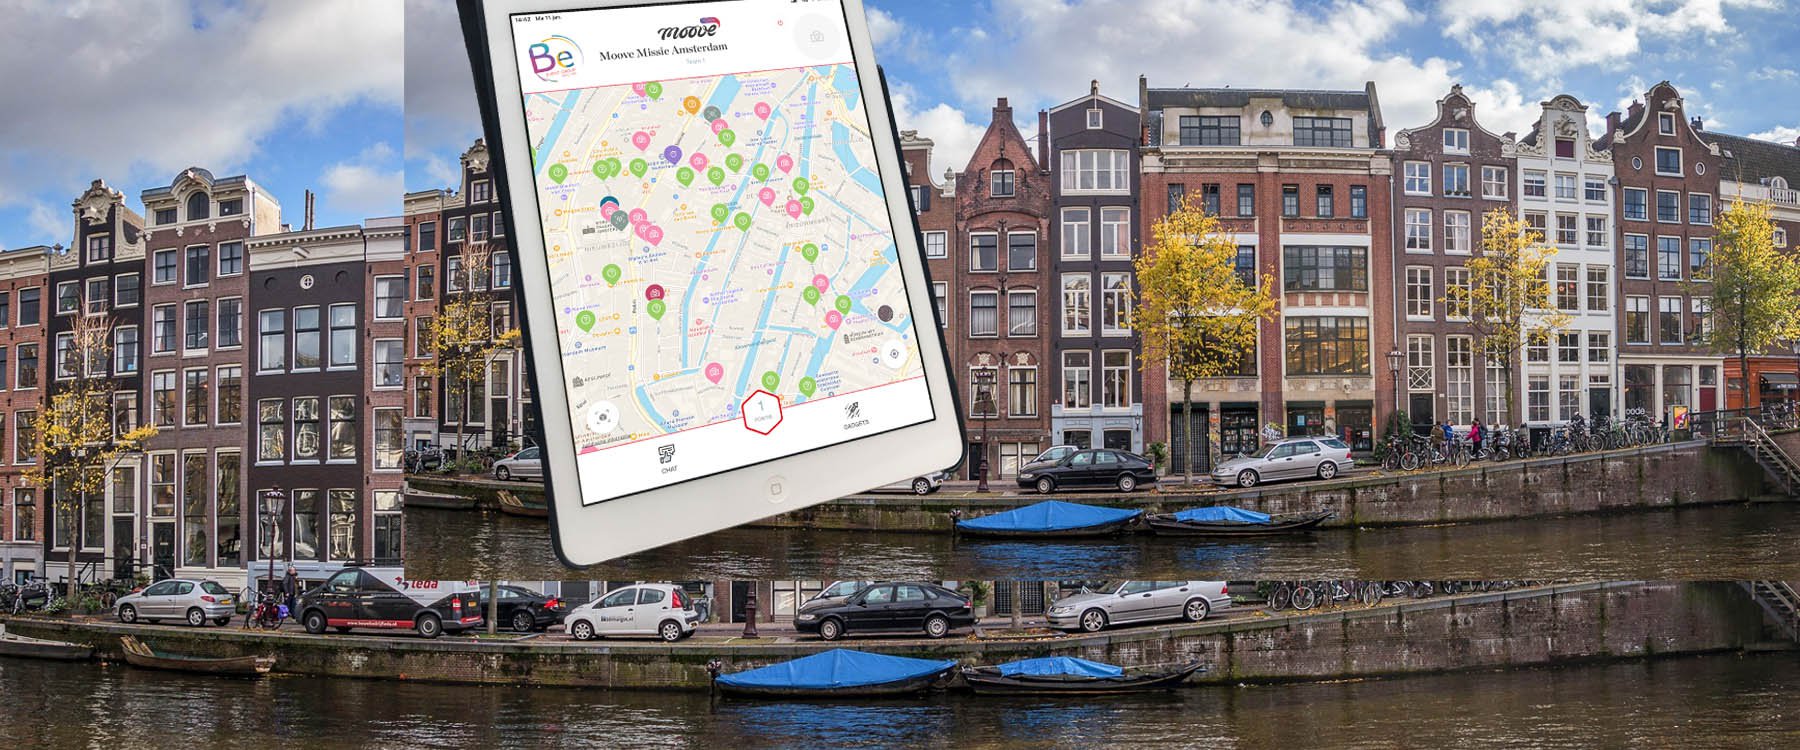 iPad crazy Amsterdam event slider 2.jpg